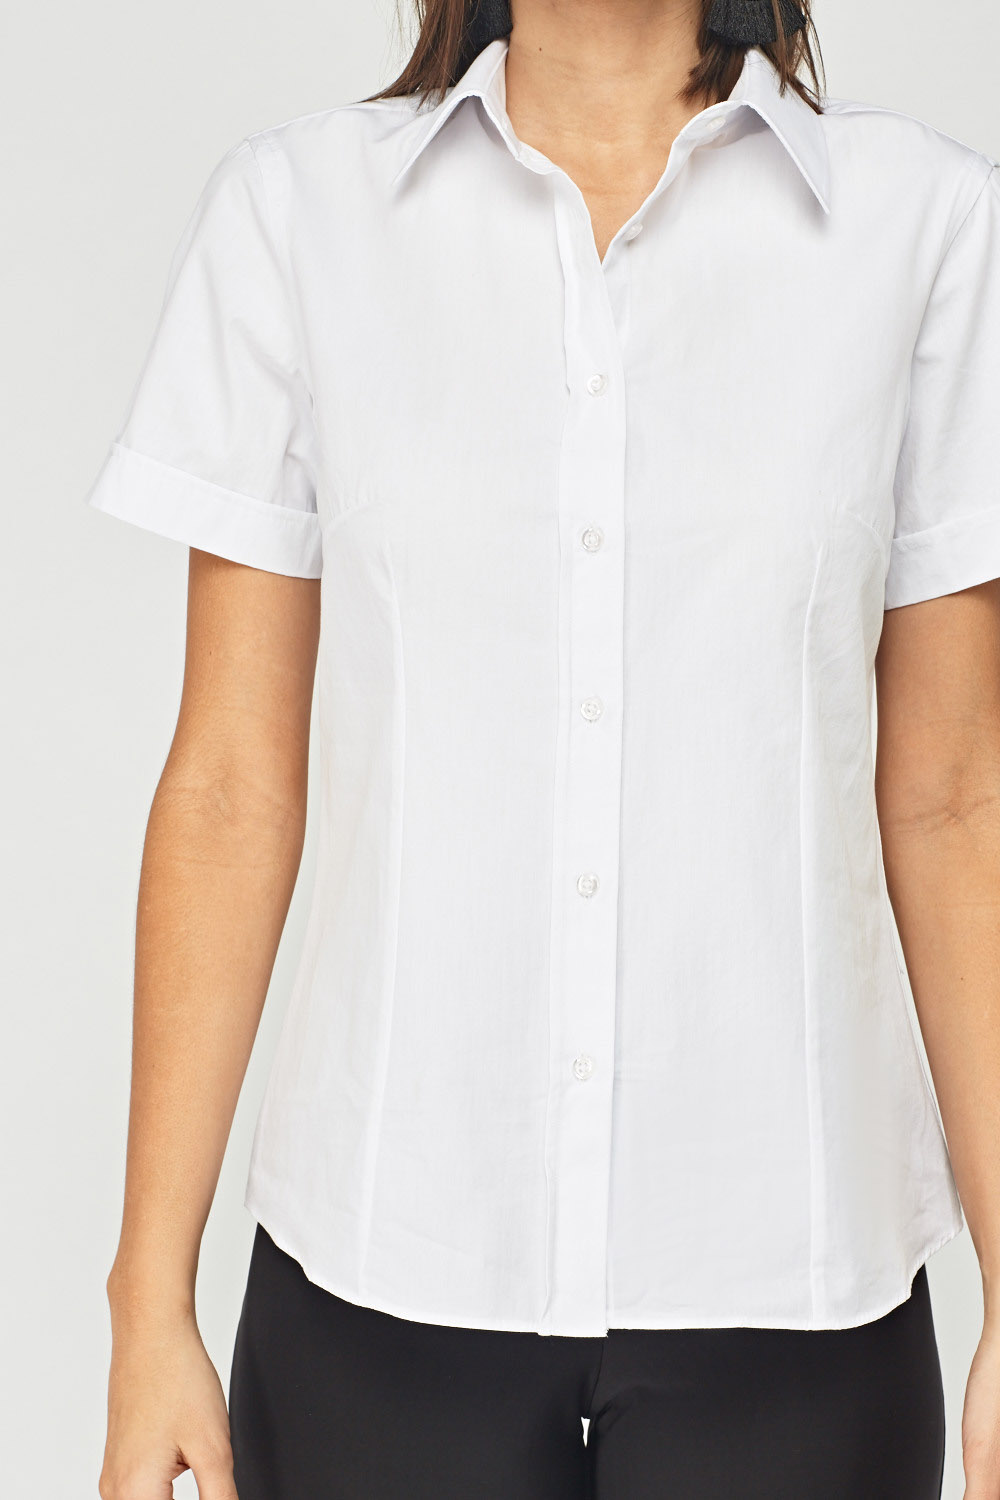 Short Sleeve White Shirt - Just $3